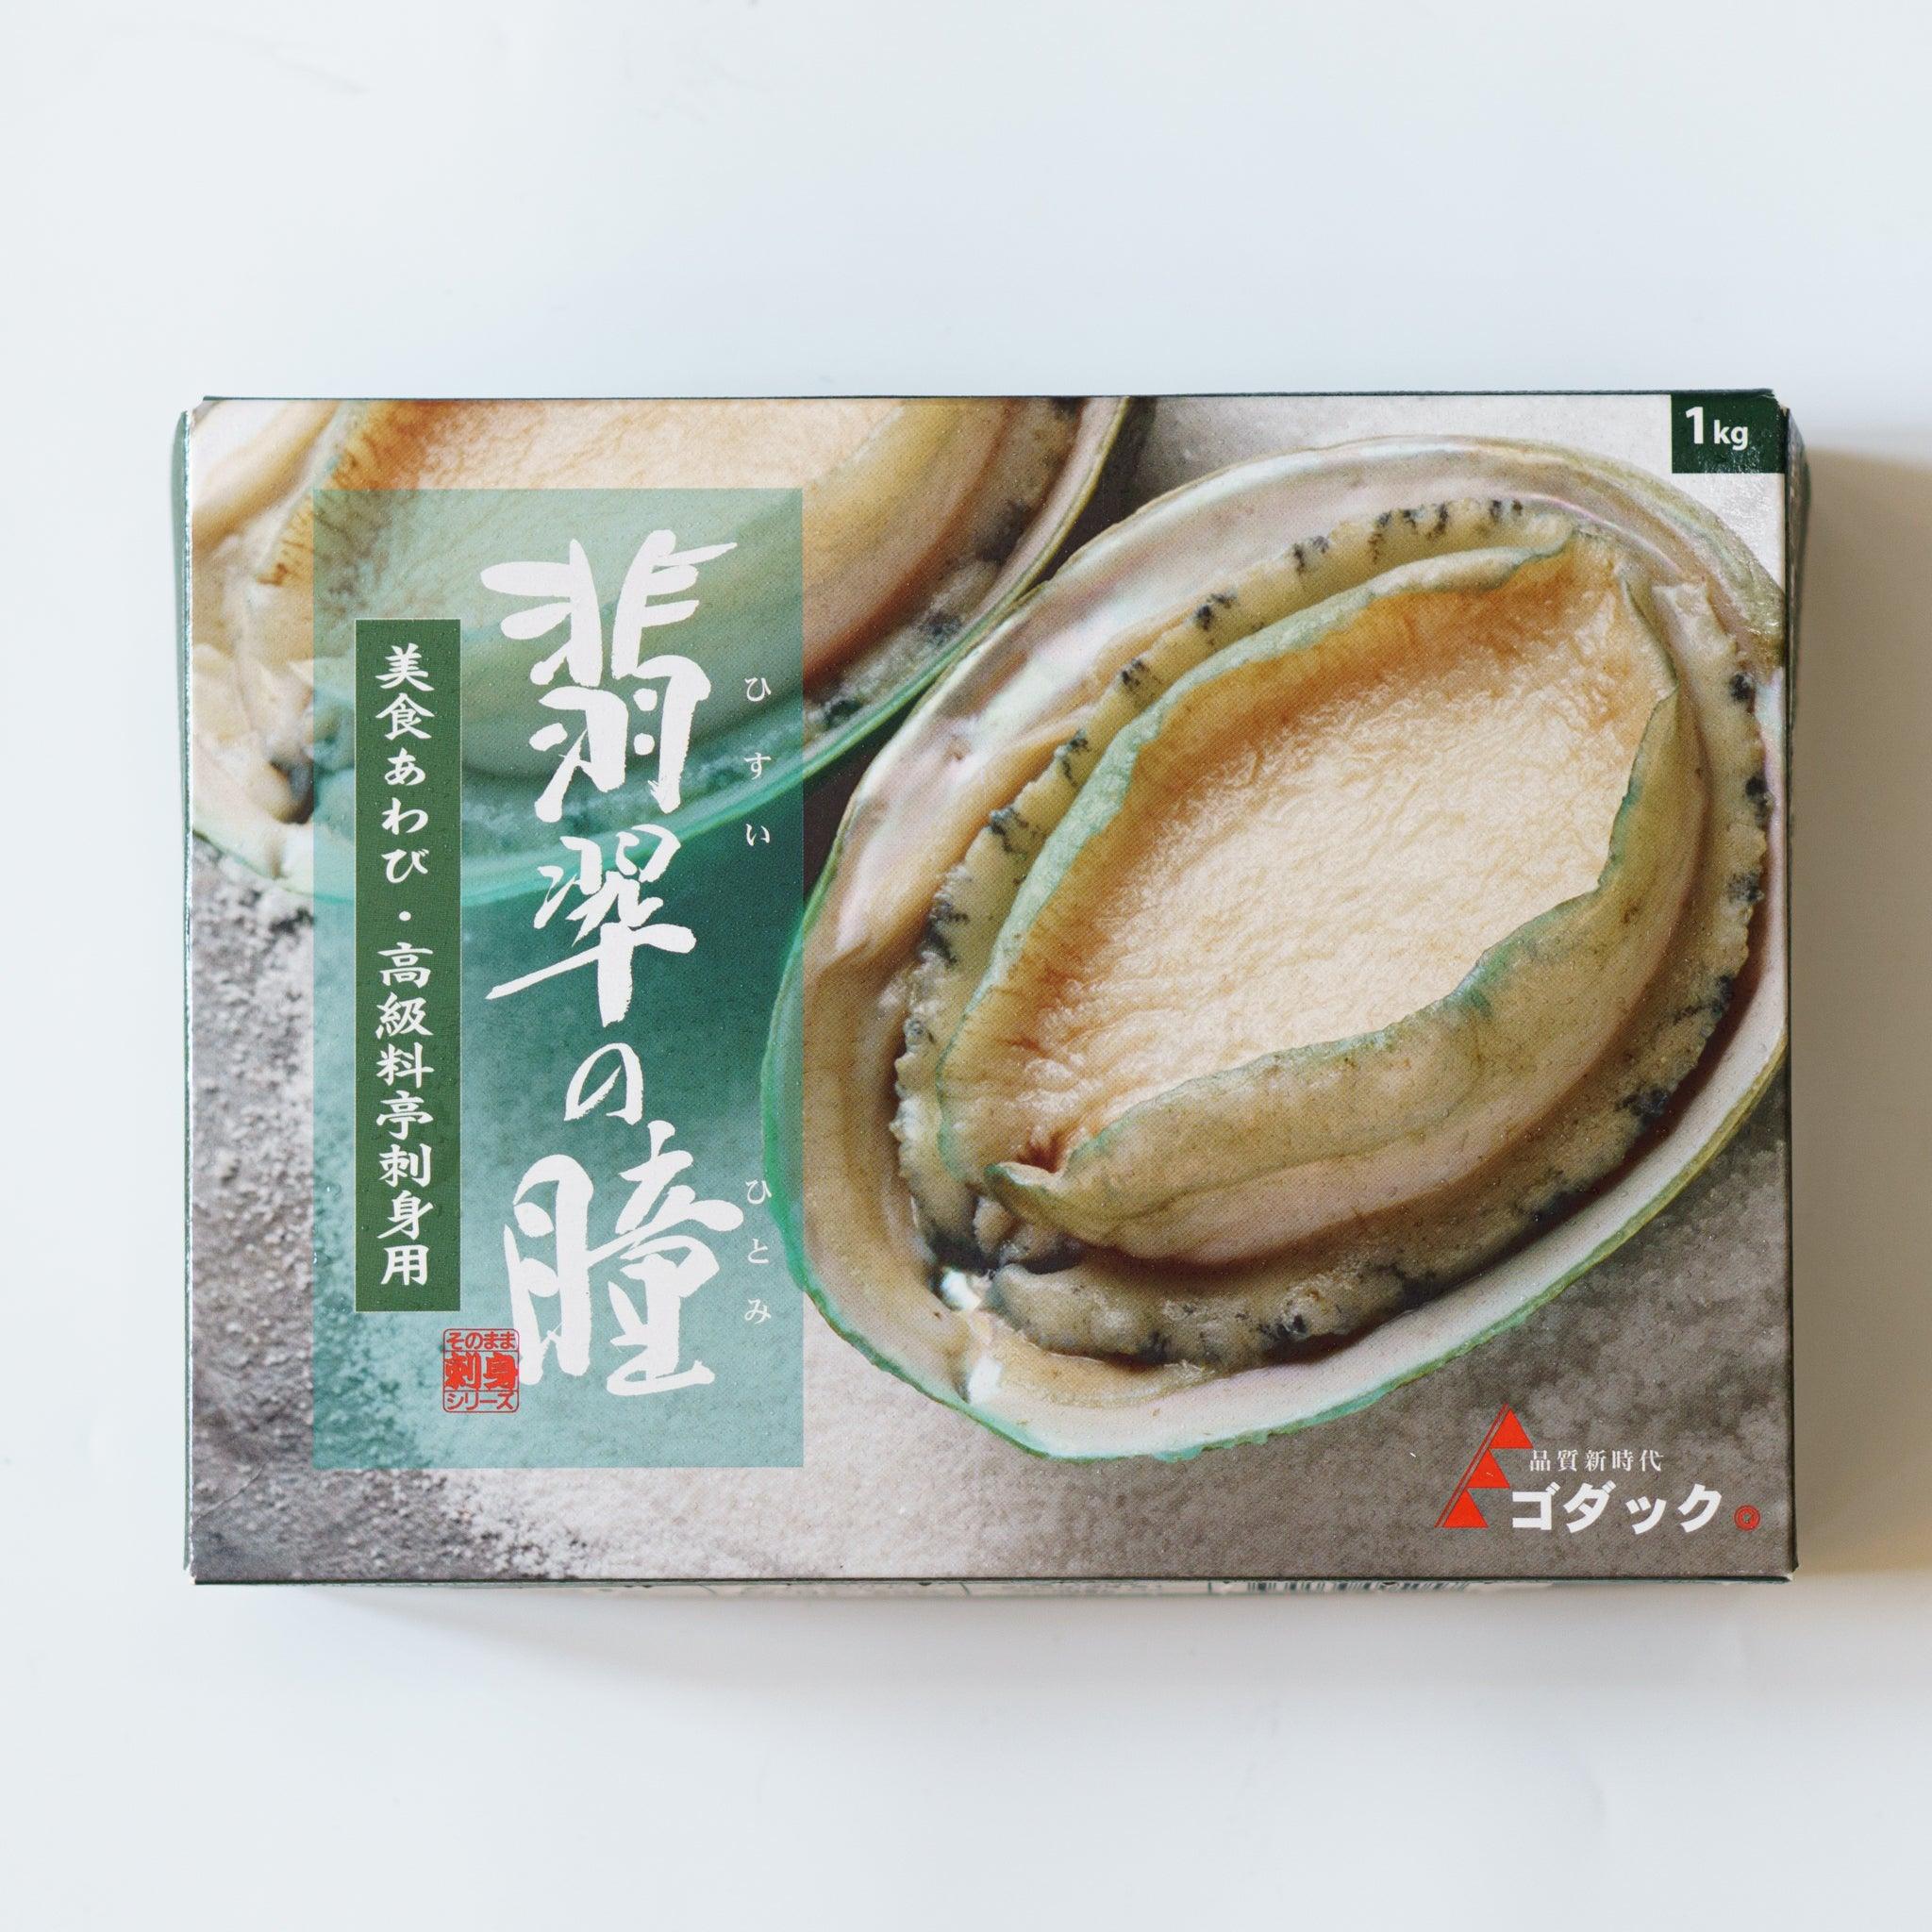 Frozen Boiled Abalone - NobleMono